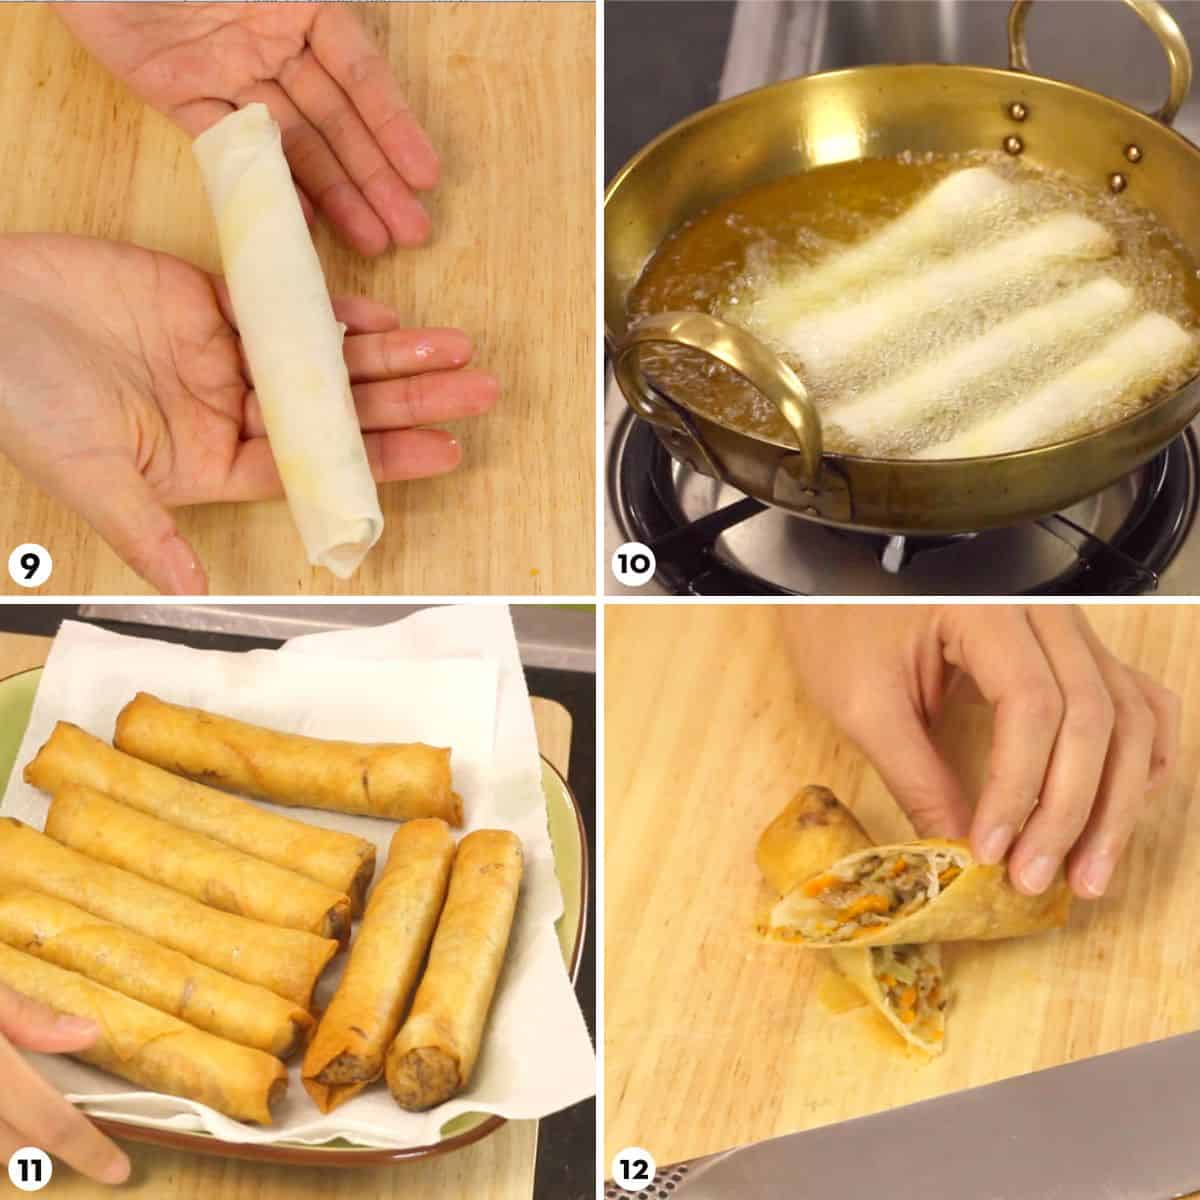 Process shots for how to make crispy spring rolls steps 9-12